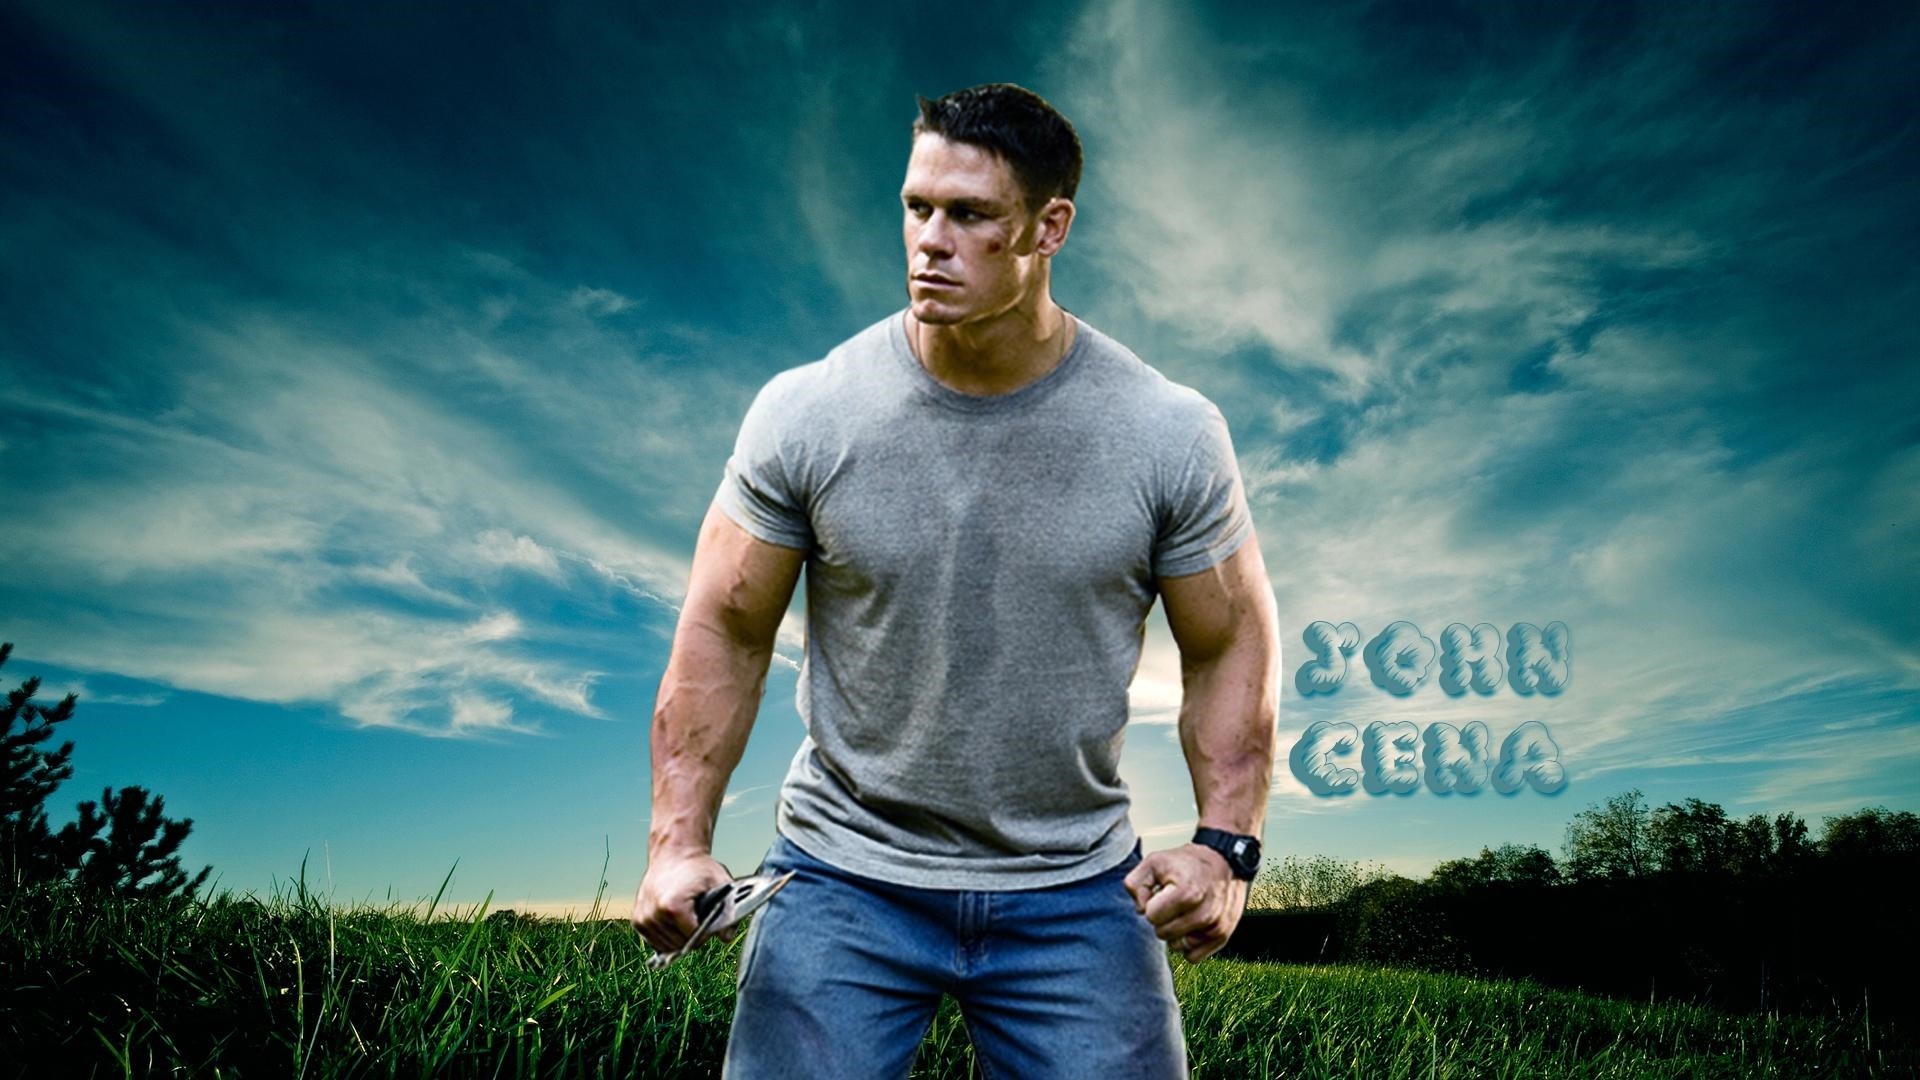 John Cena HD Wallpaper For Desktop Pictures